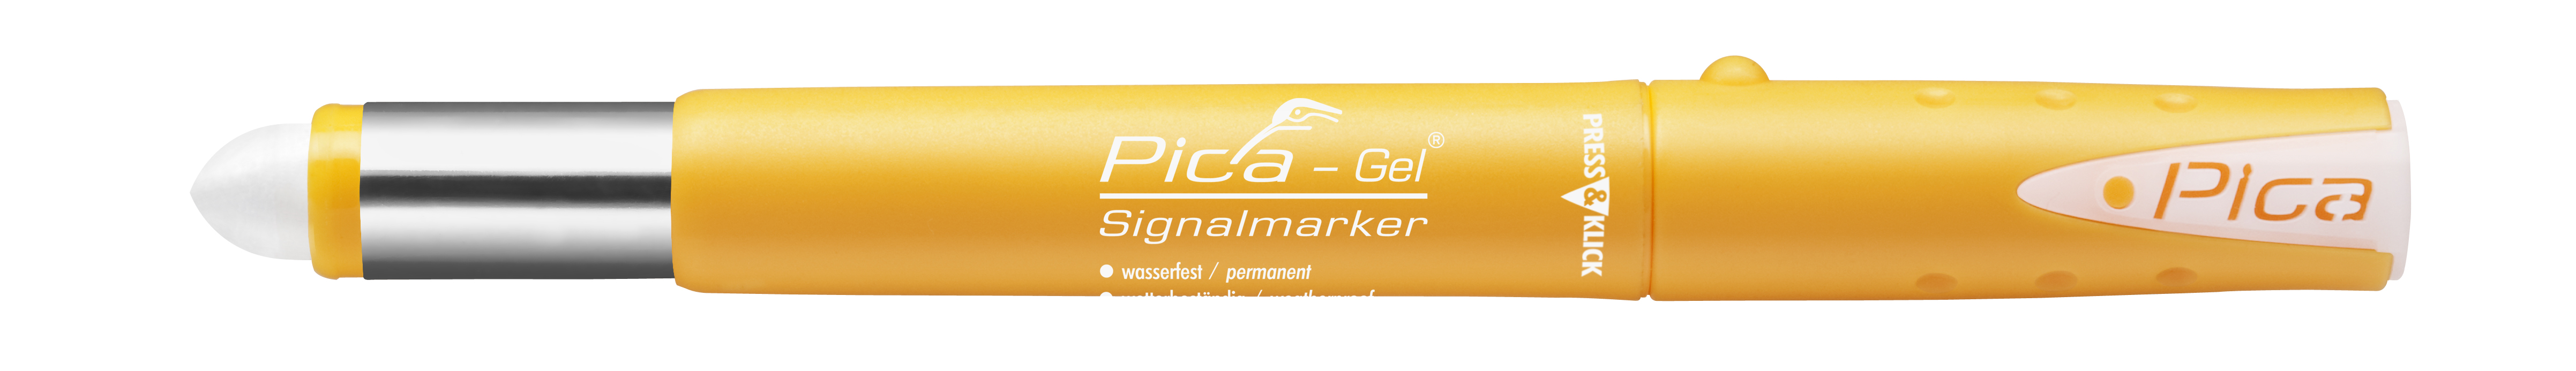 Pica Gel Signalmarker